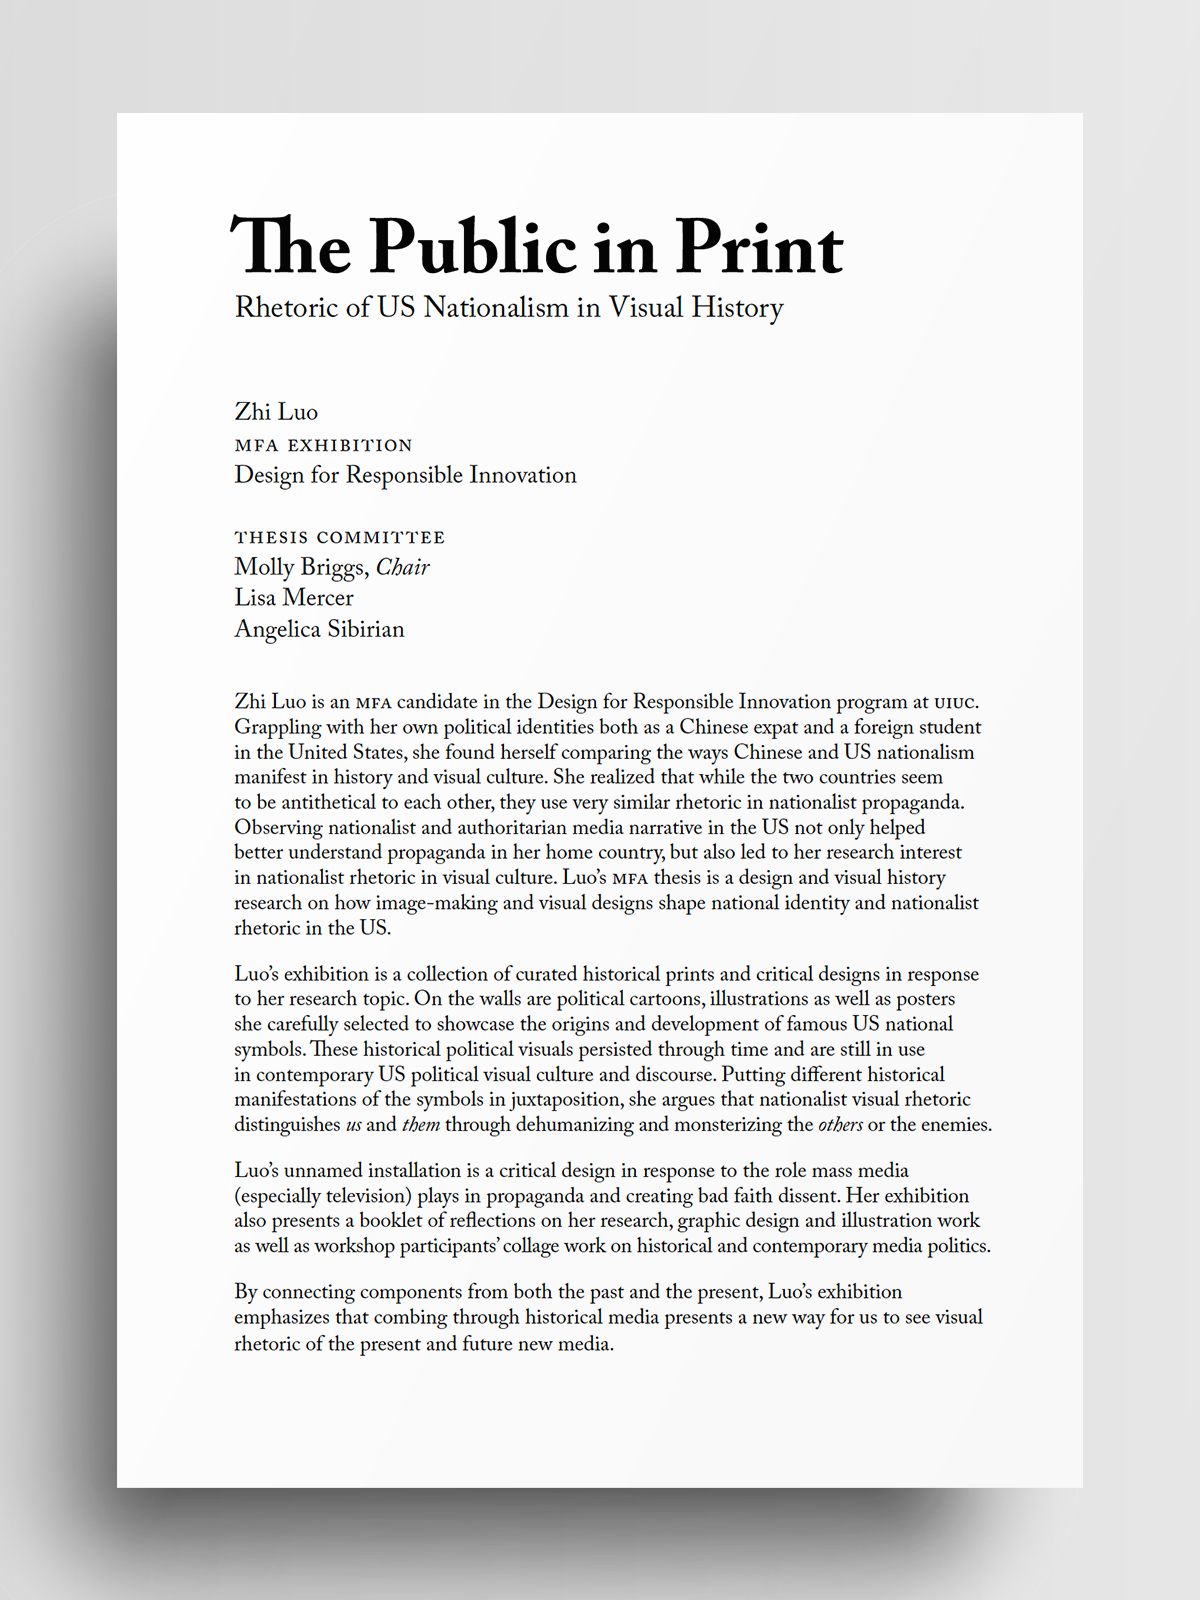 The Public in Print—MFA Exhibition Statement